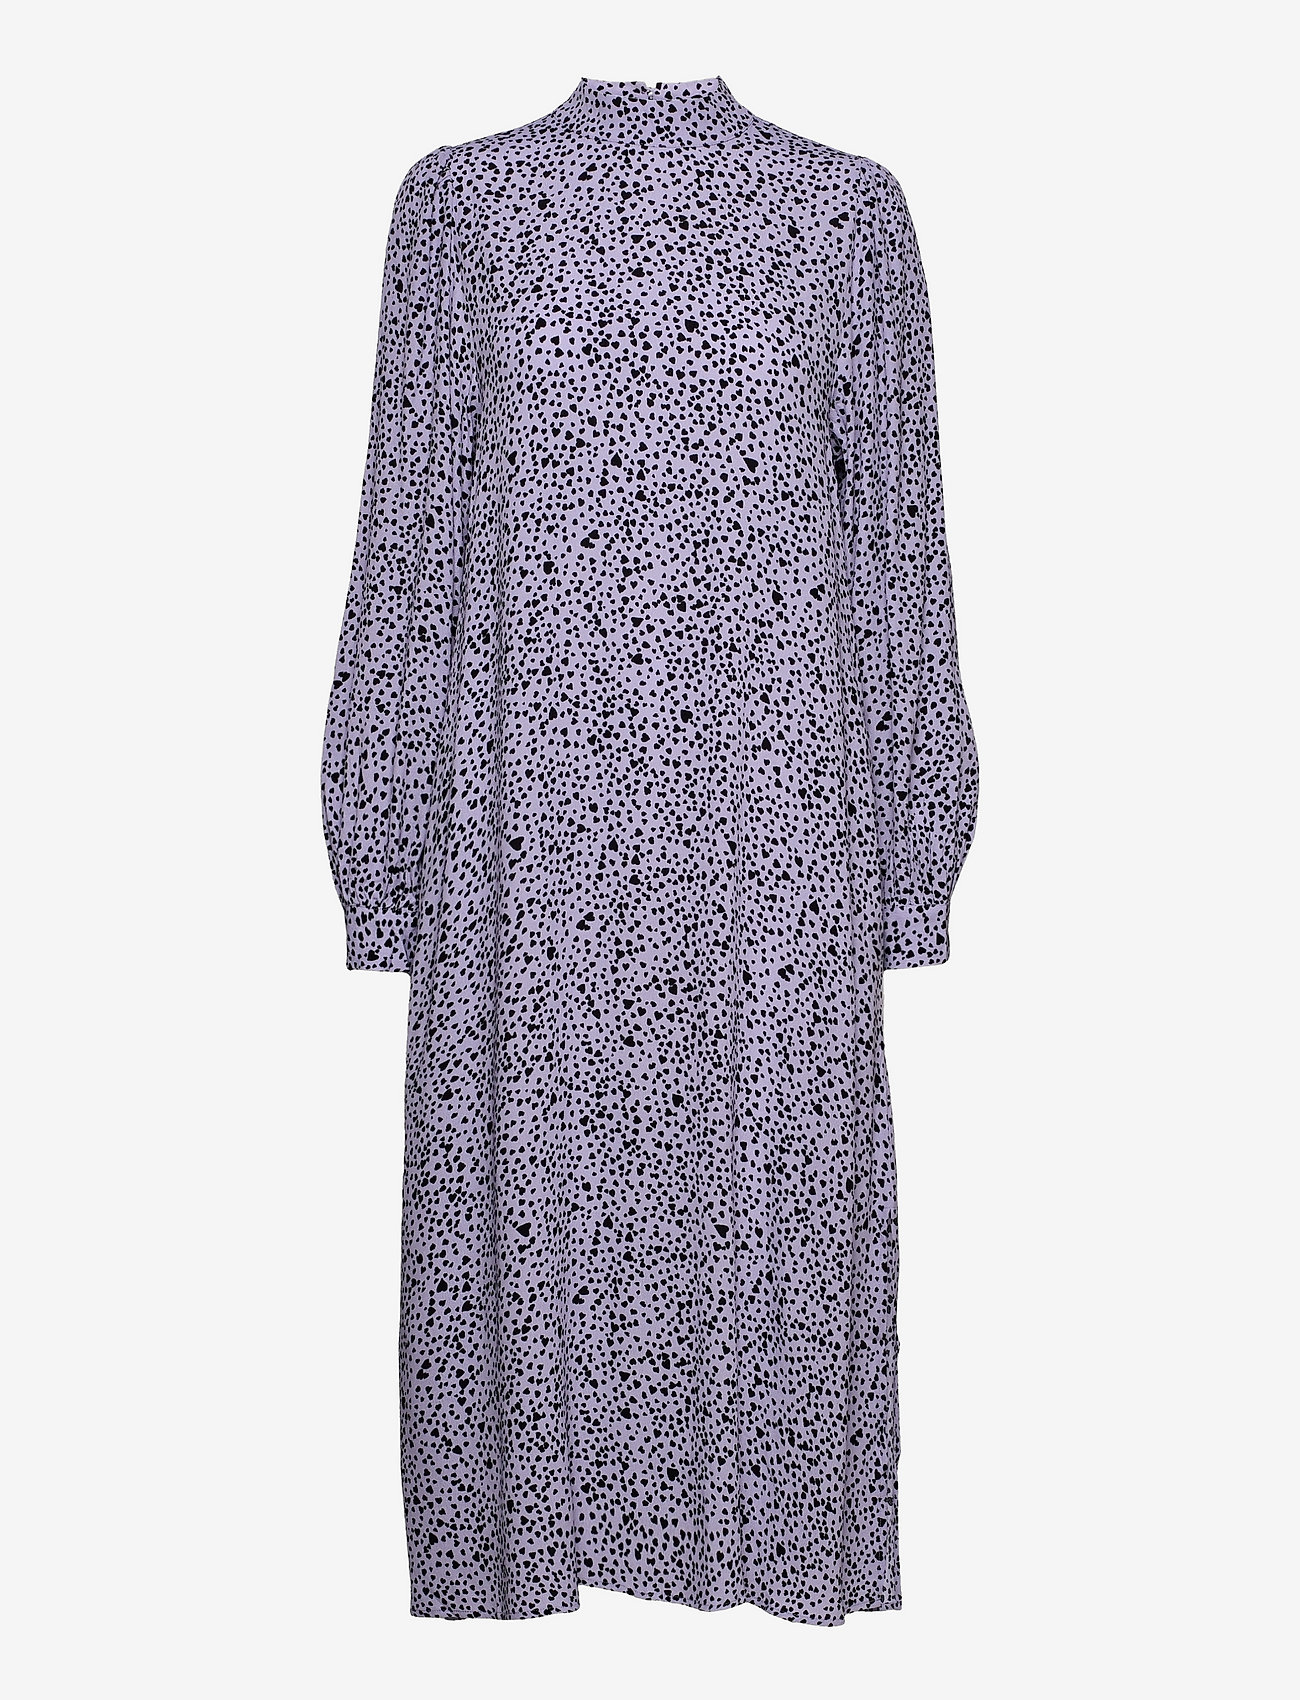 mbyM - Hestia - sukienki do kolan i midi - decima lavender print - 0